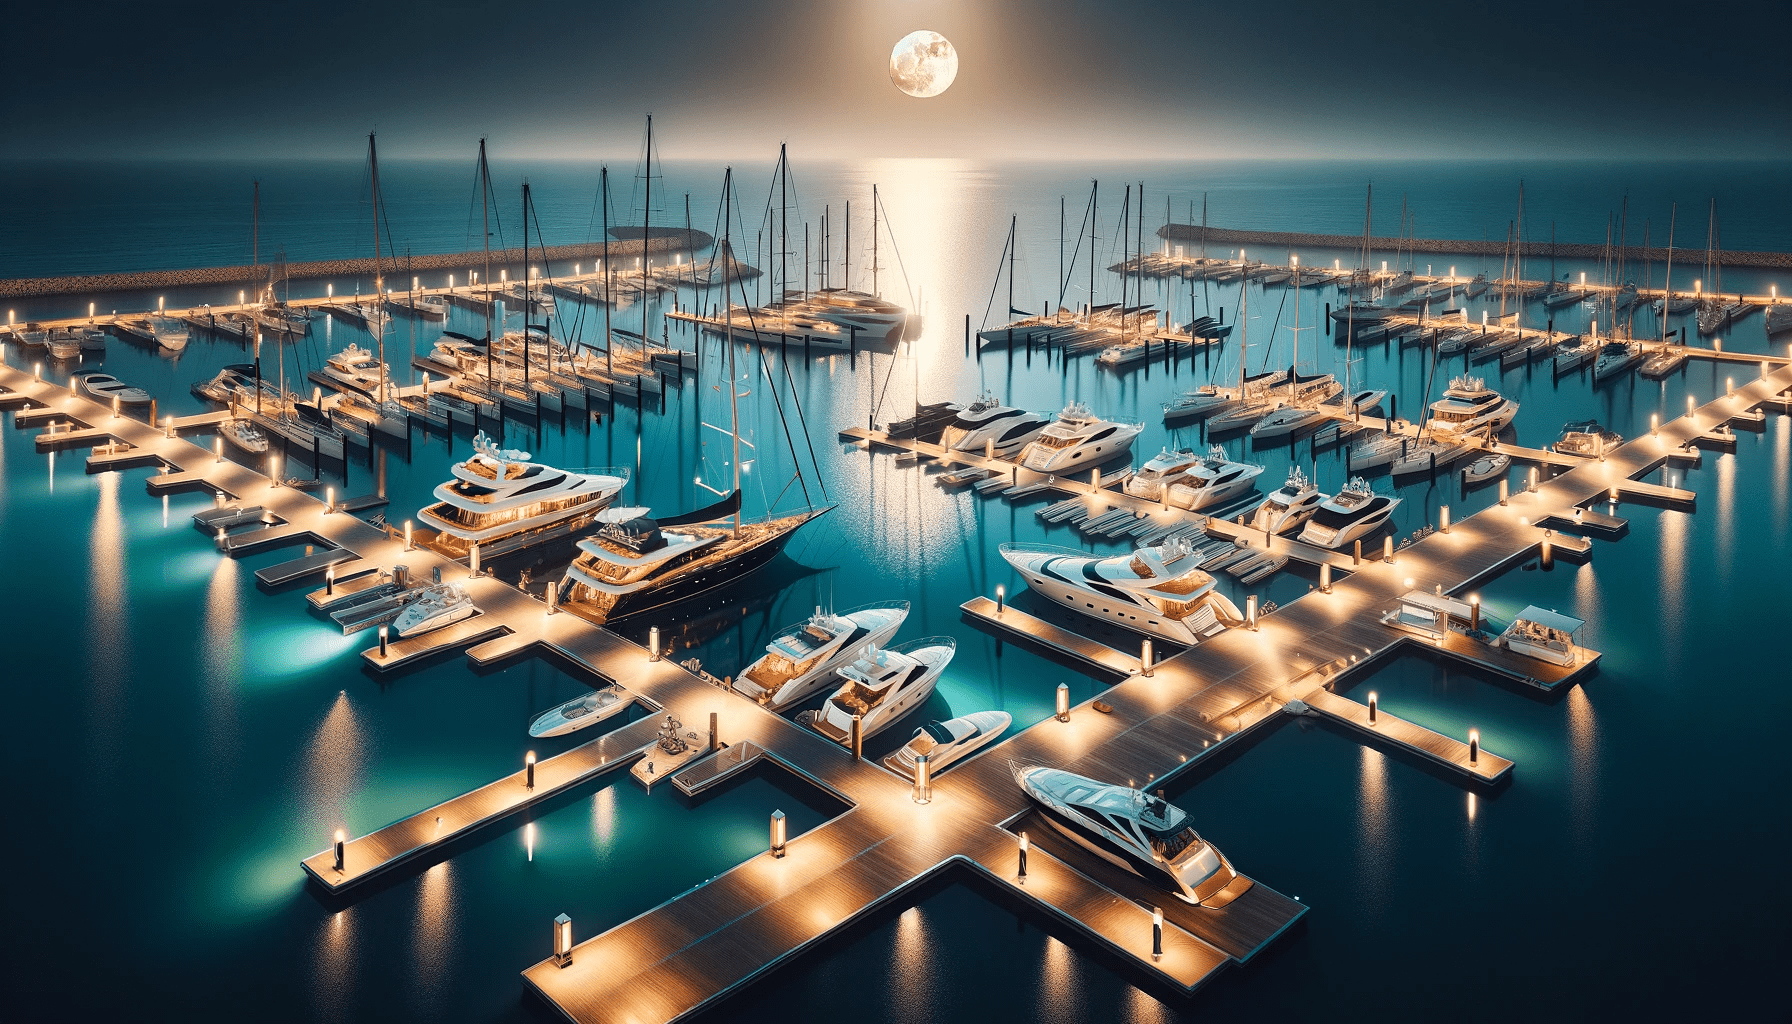 Use Boat Assessor at night